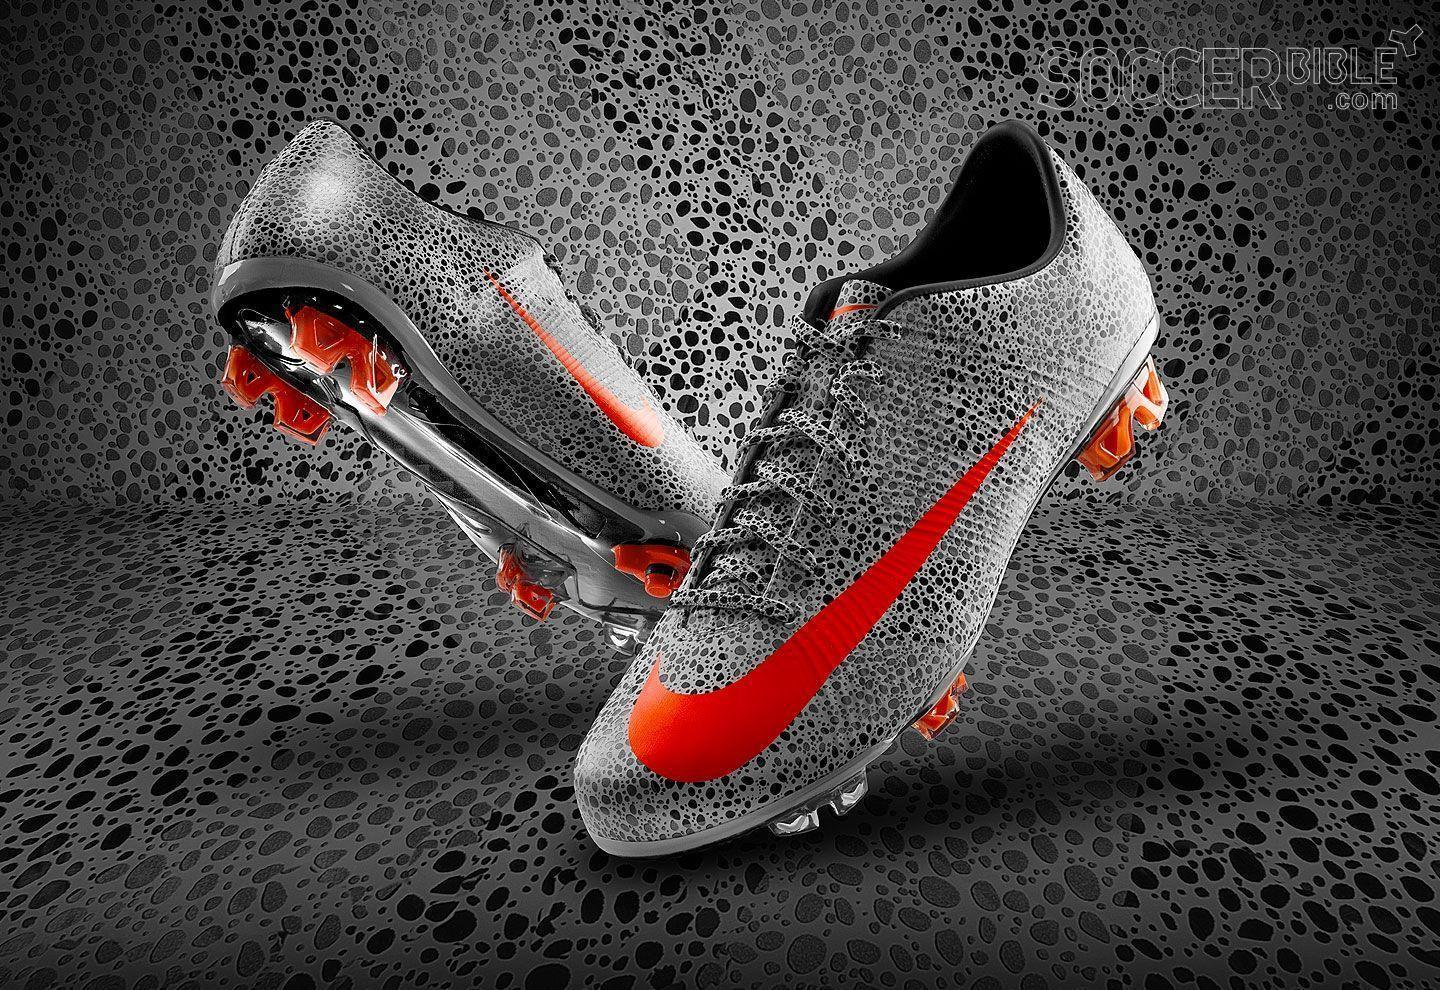 Nike Cr Safari Football Boots Exclusive Soccerbible 1440x990